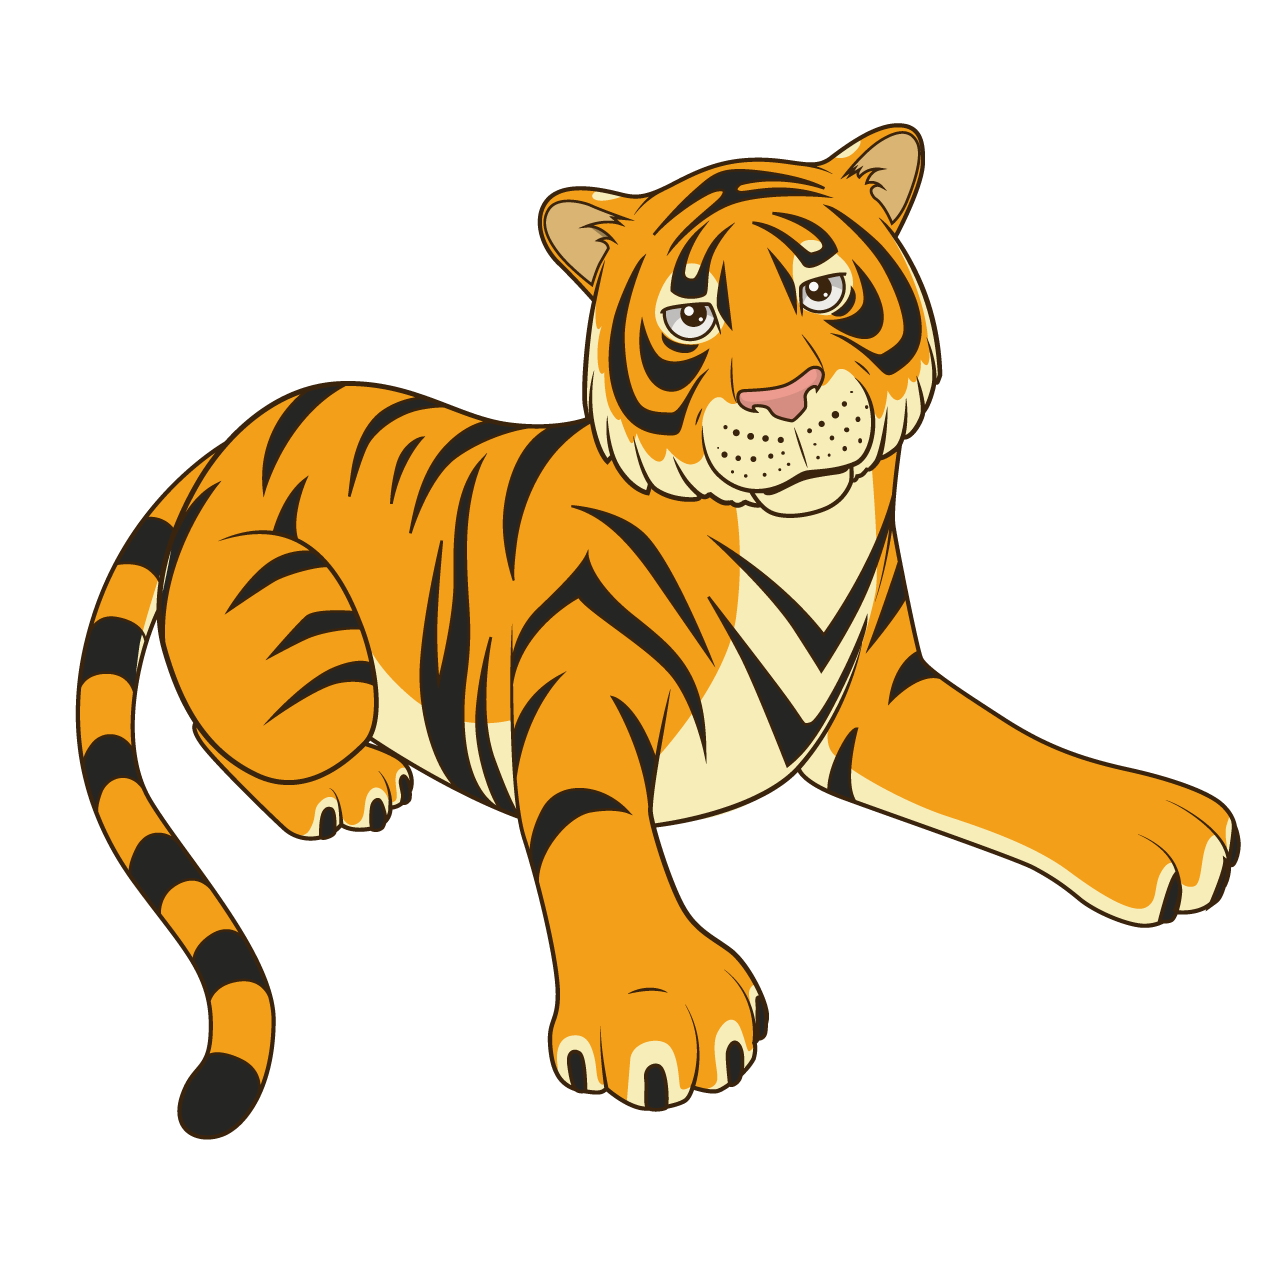 Tiger Black Cartoon Illustration Panther Free Clipart HQ PNG Image